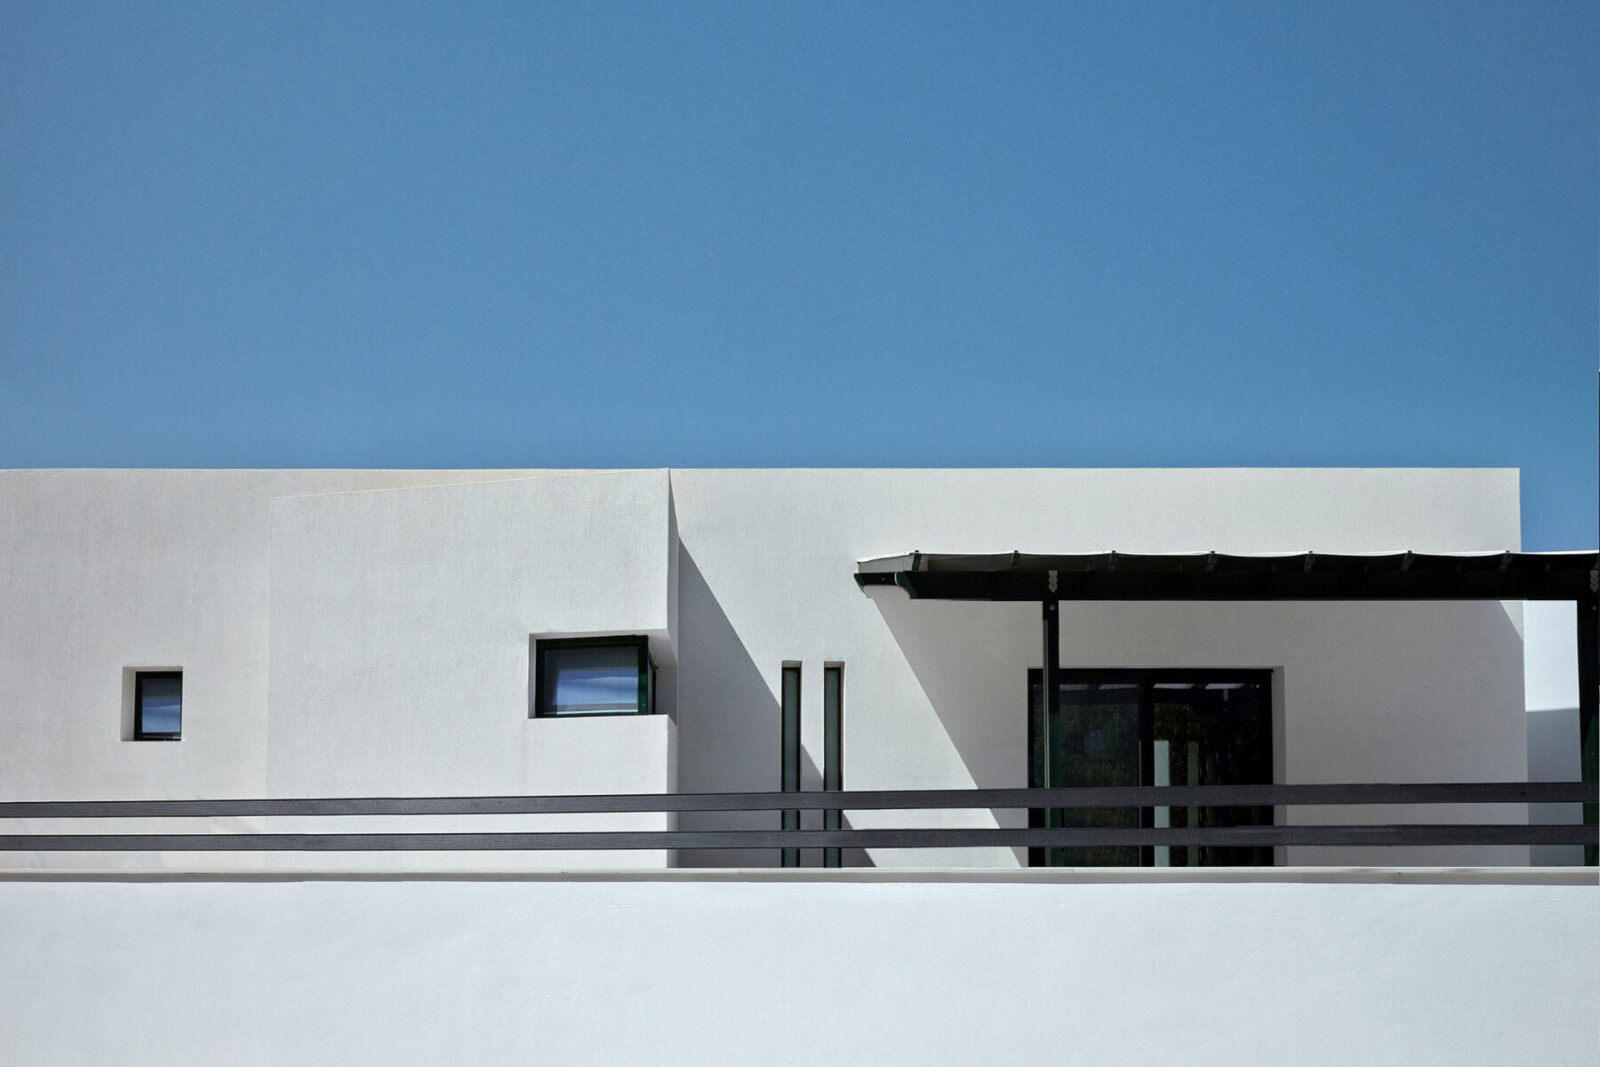 Archisearch Amalgama Architects: Every space tells a story